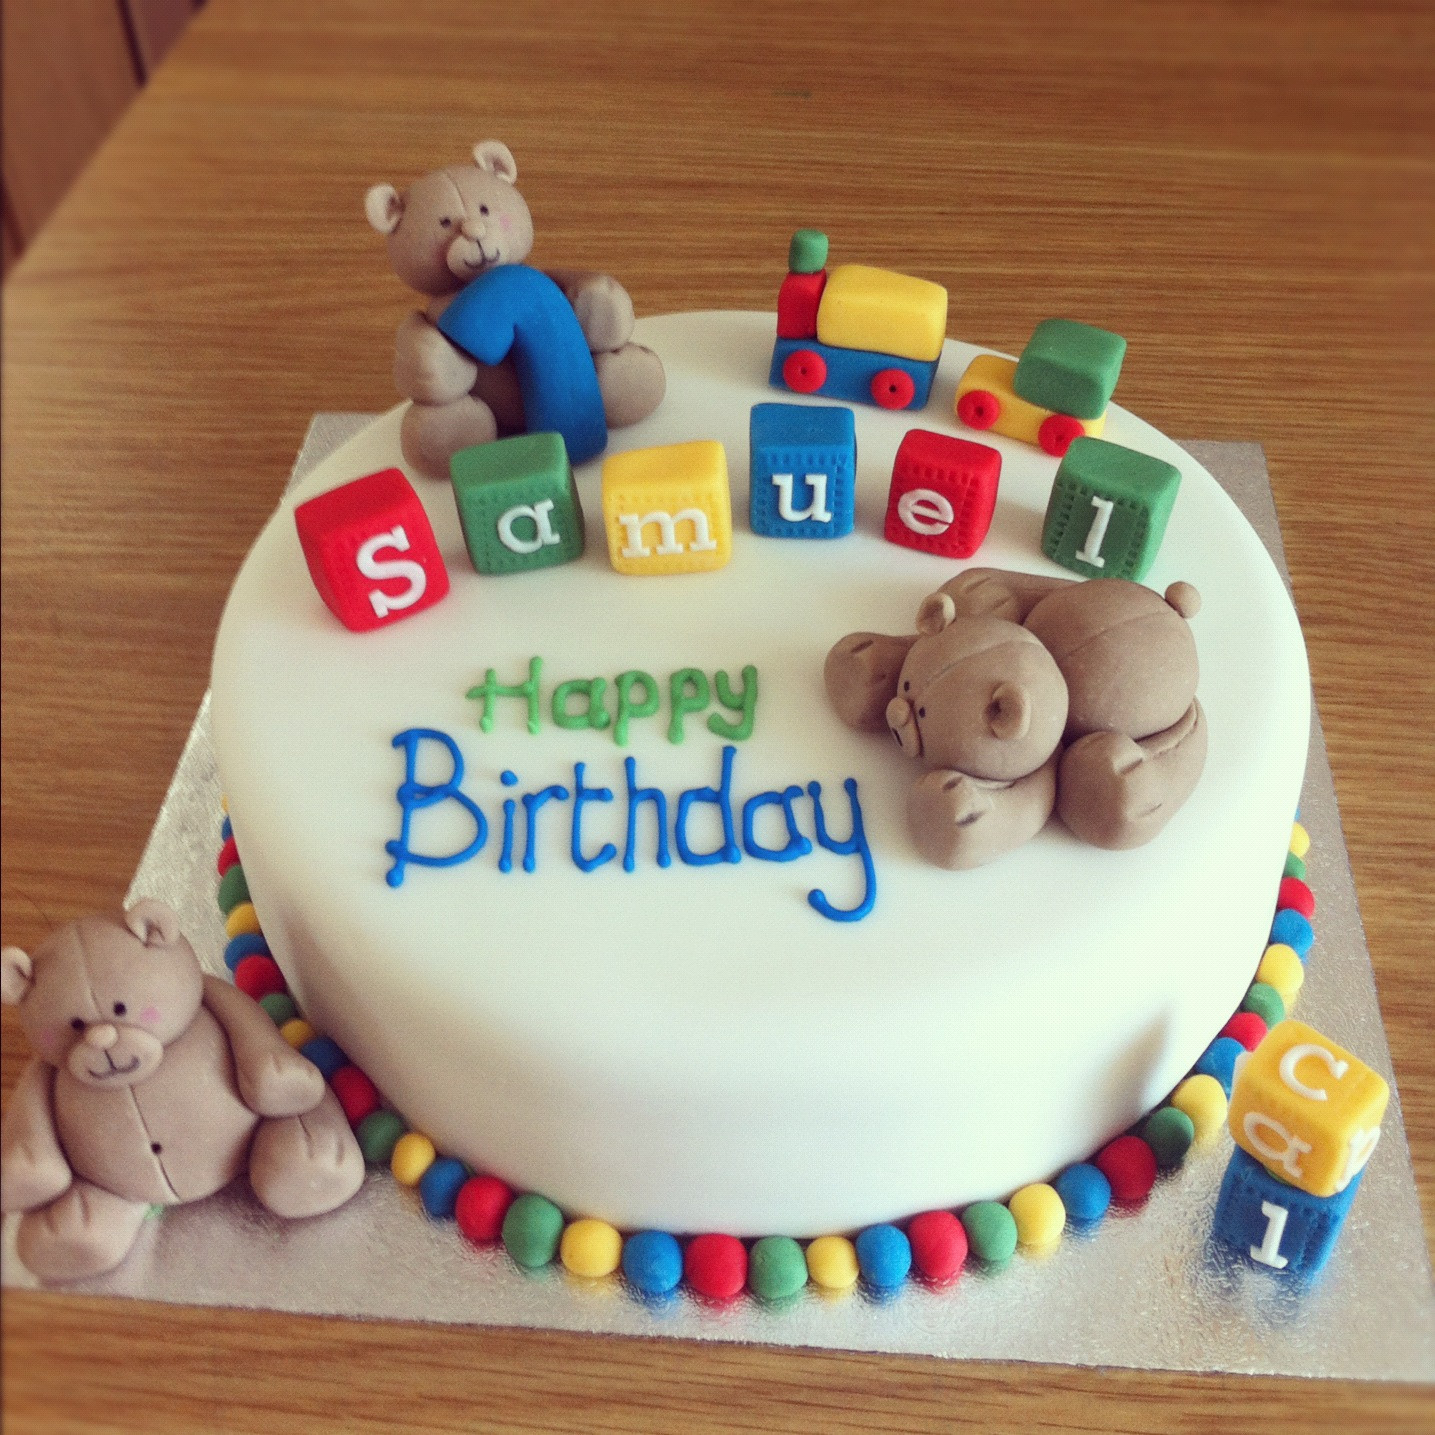 Best ideas about Birthday Cake Ideas For Boys
. Save or Pin 15 Baby Boy First Birthday Cake Ideas Now.